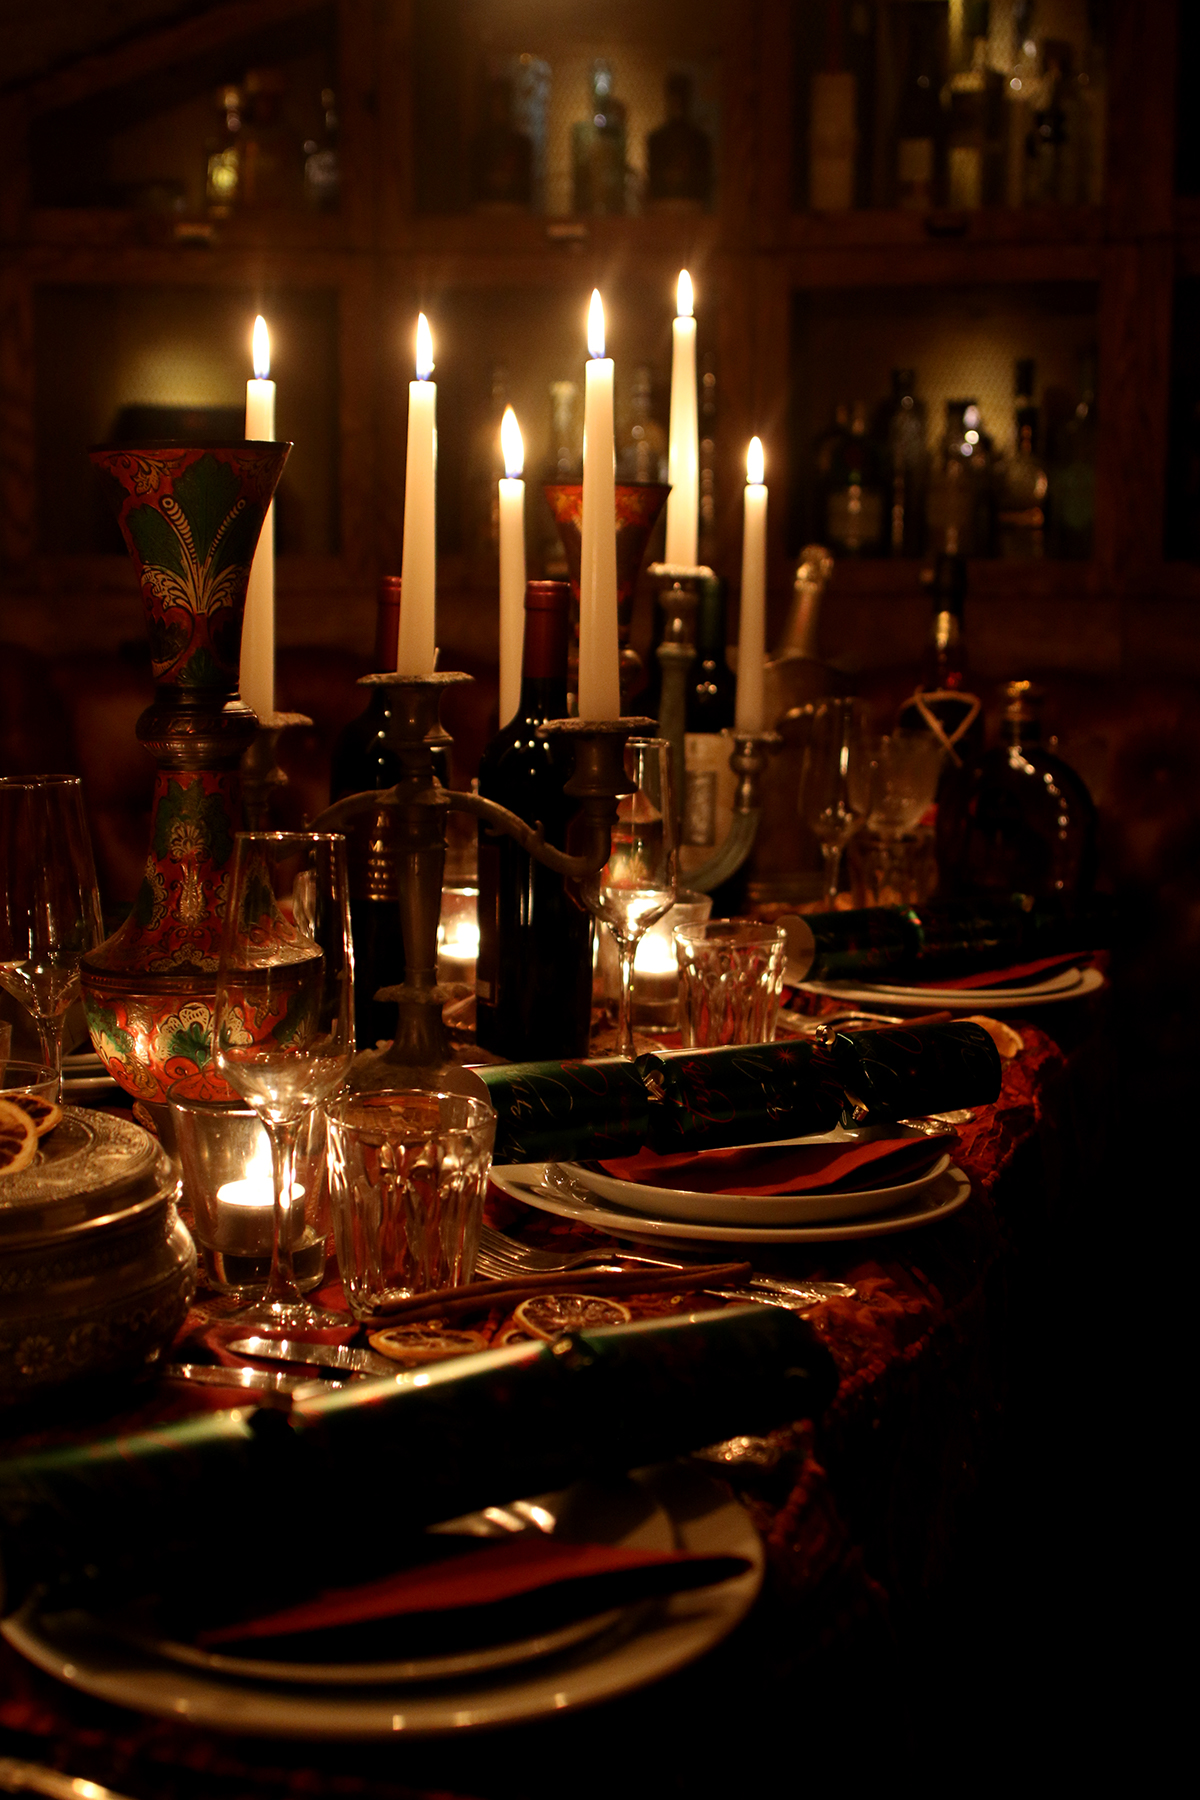 subterranean-private-christmas-dinner-dining-experiences-tt-liquor